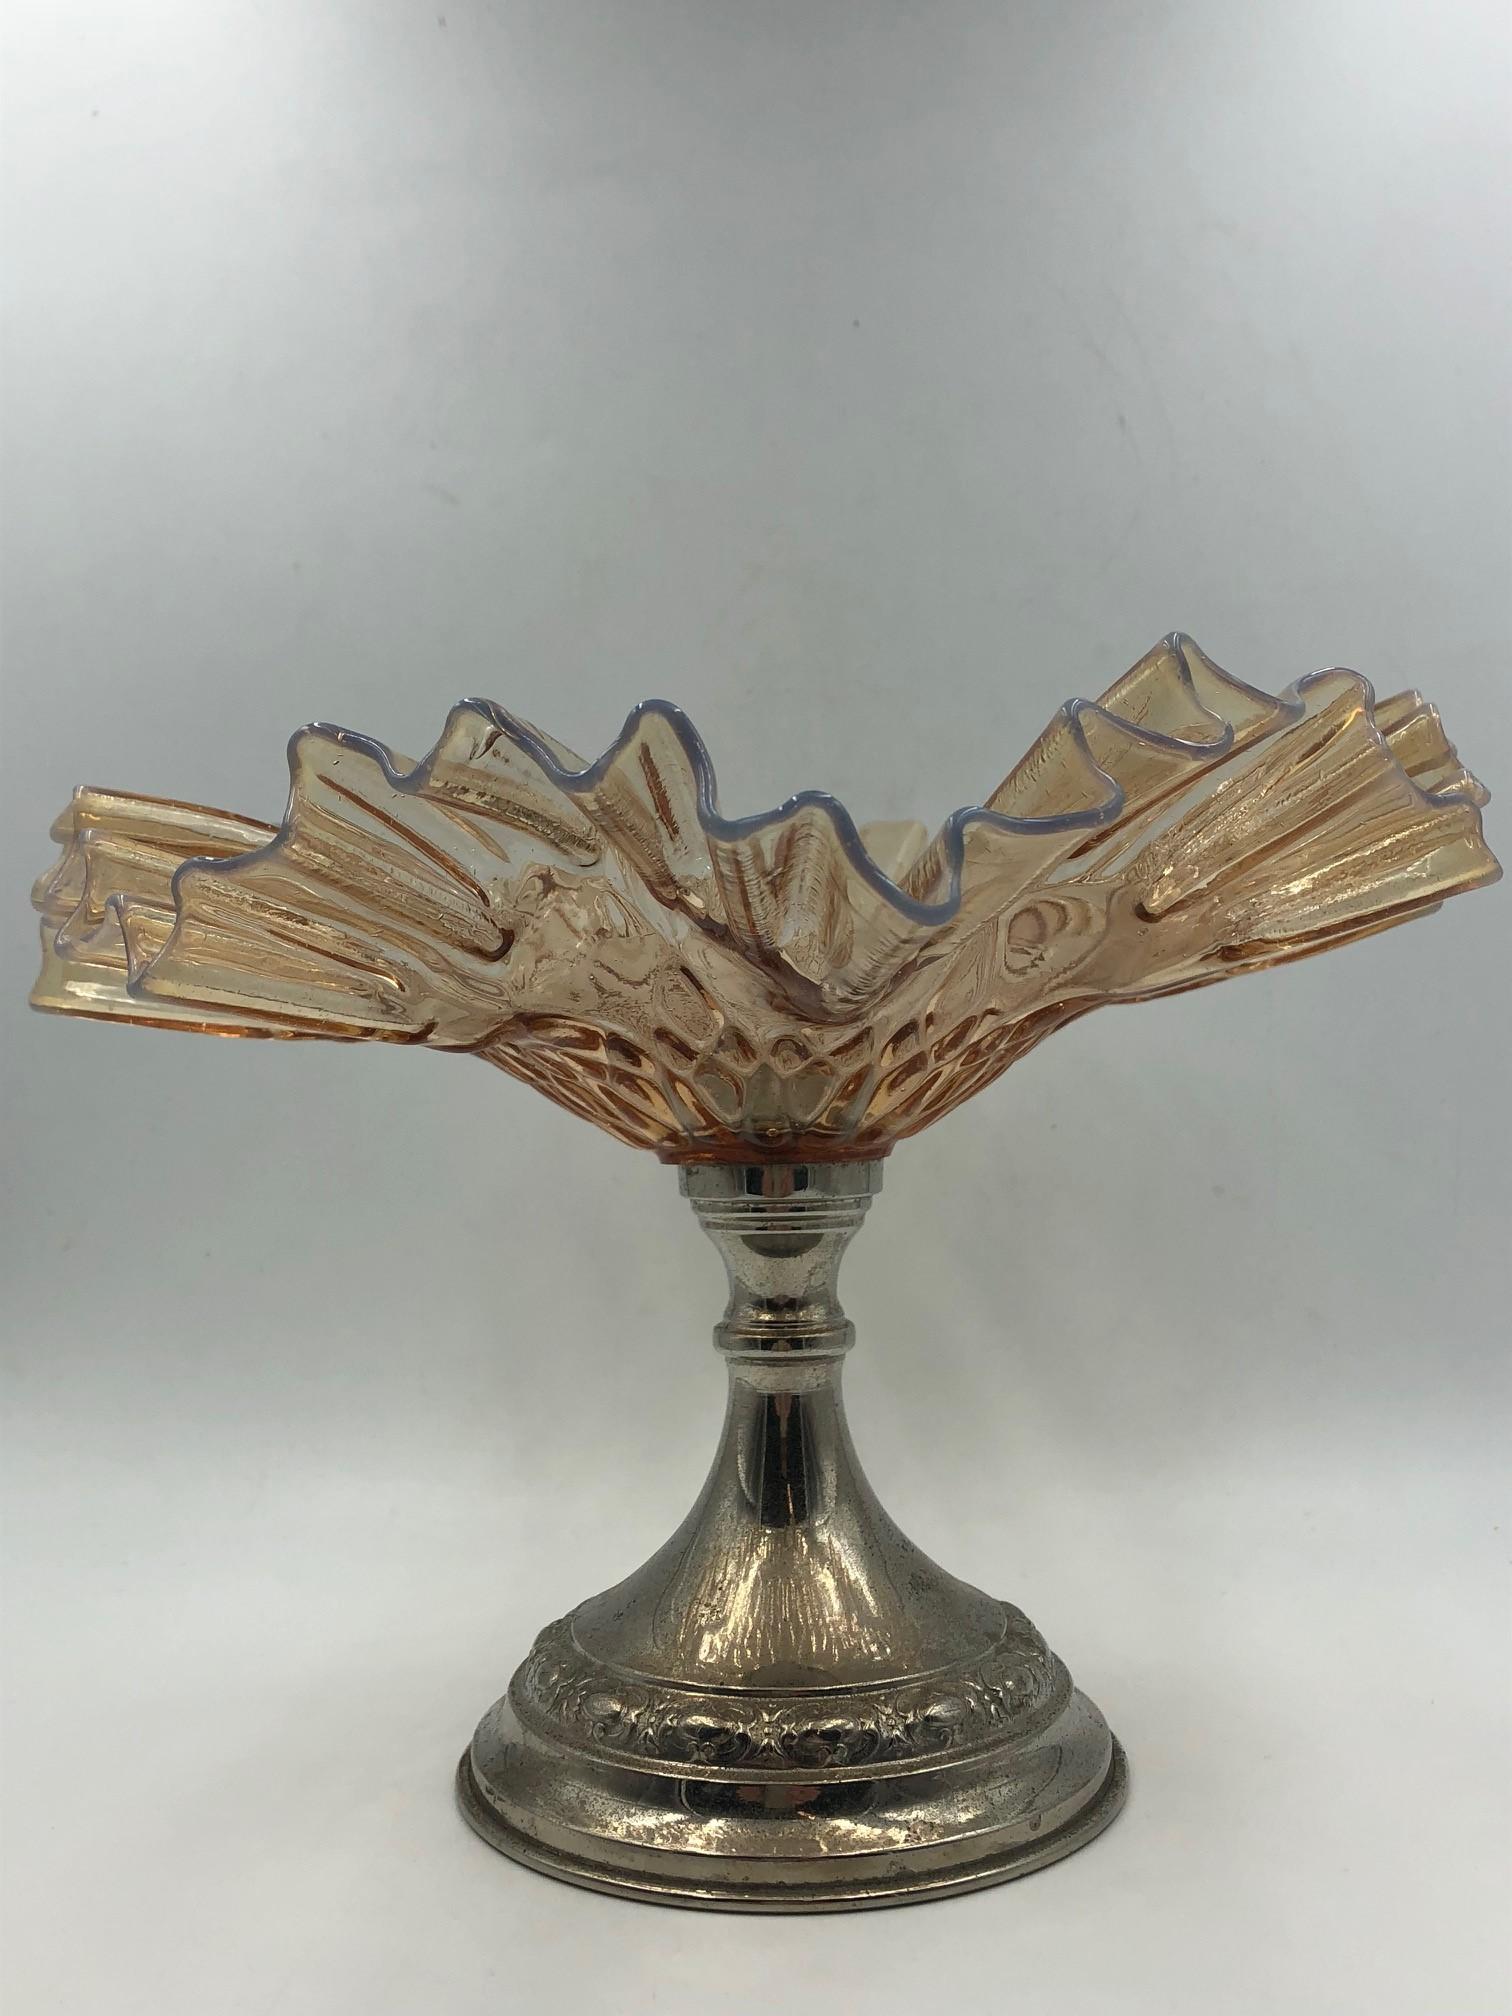 Very rare antique Venetian hand blown opalescent Italian art glass bowl. It has a ruffled rim, with a net pattern
Victorian era.